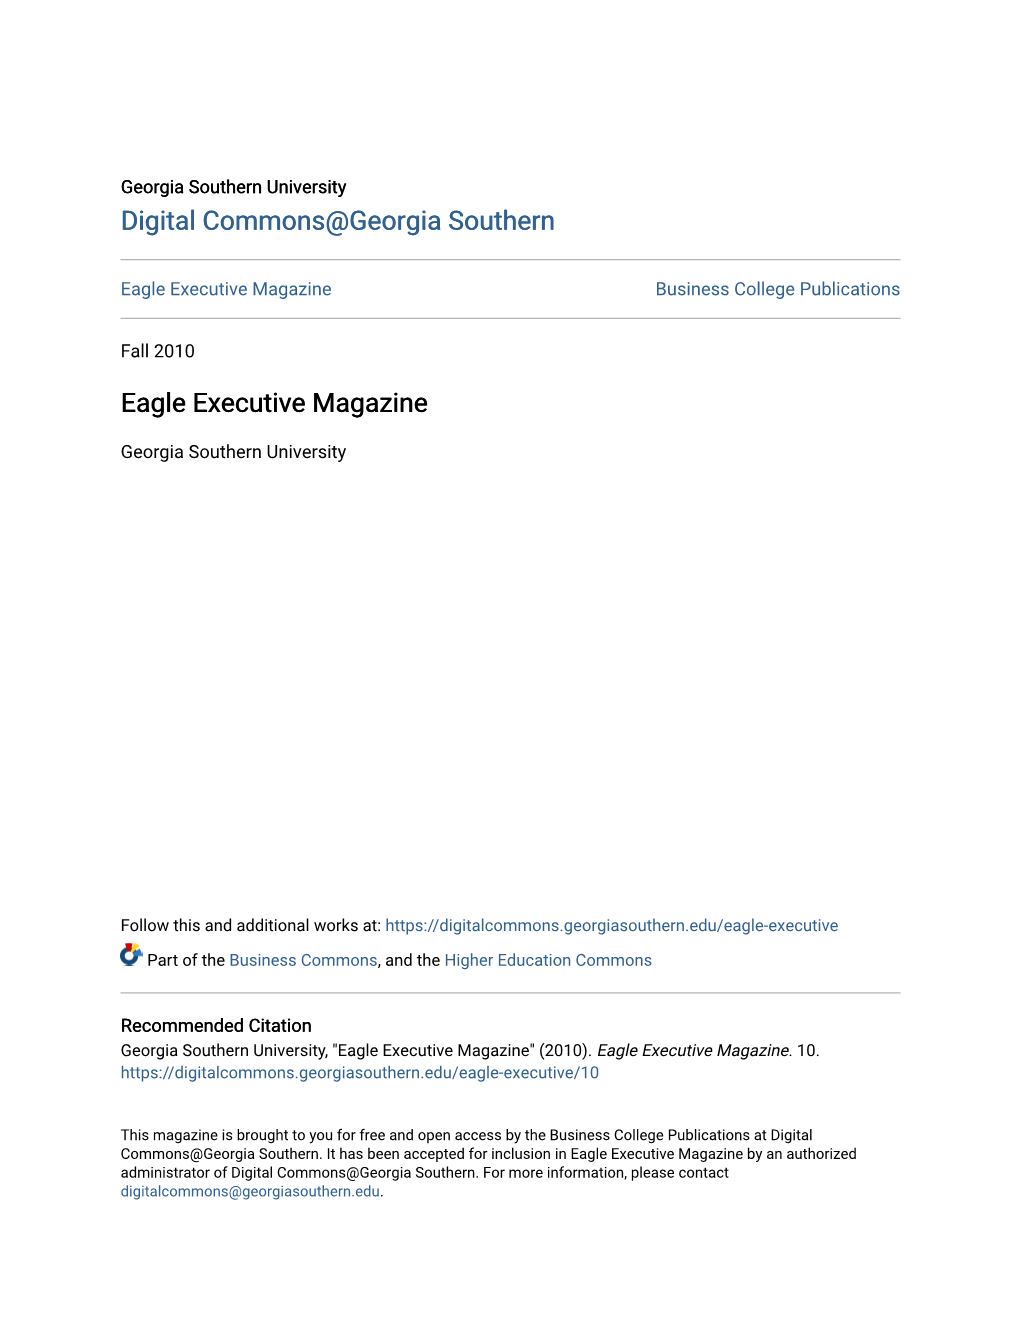 Eagle Executive Magazine Business College Publications